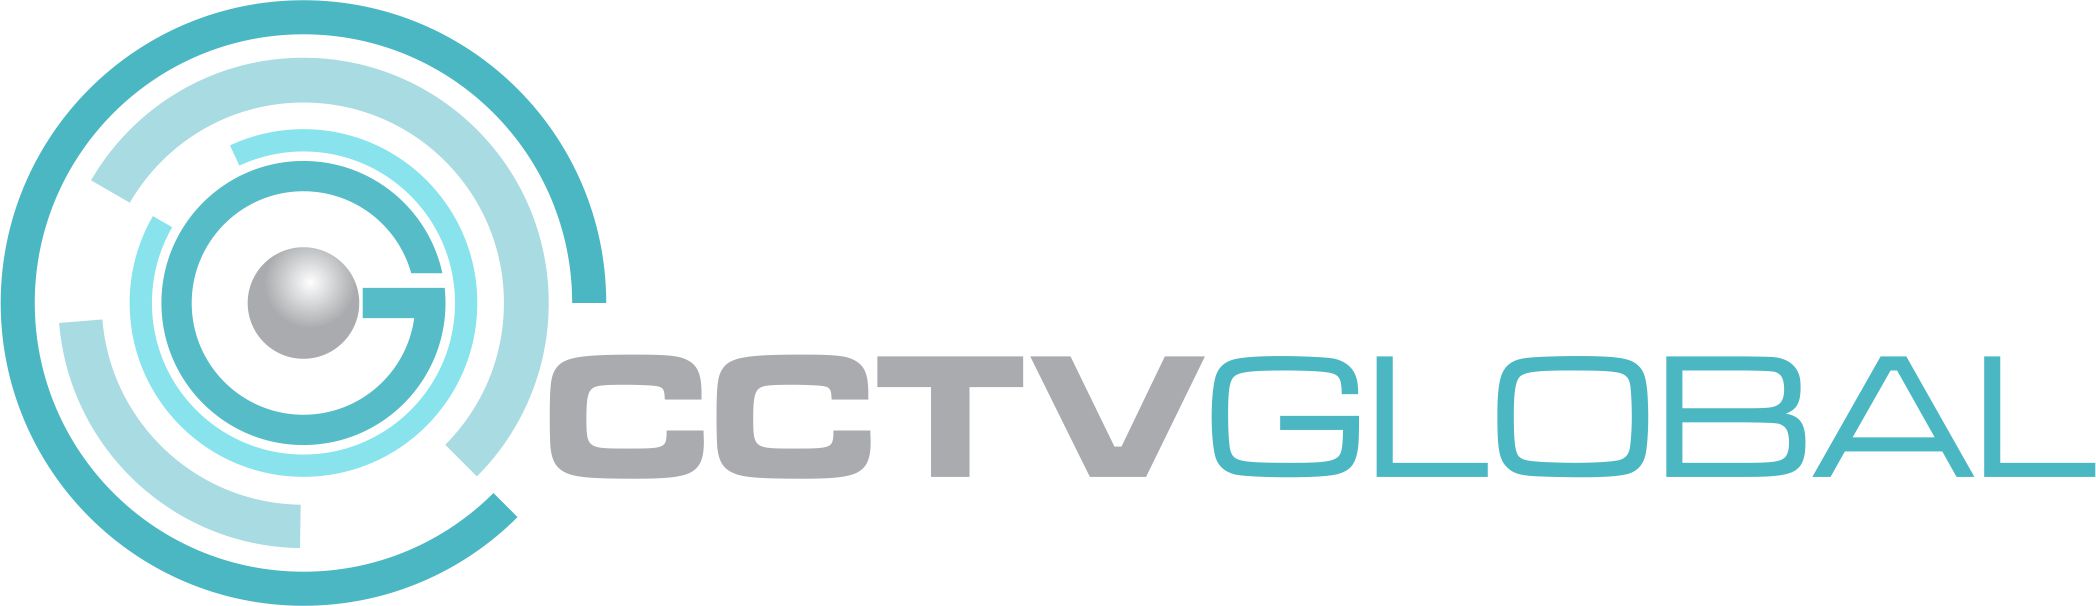 cctv global